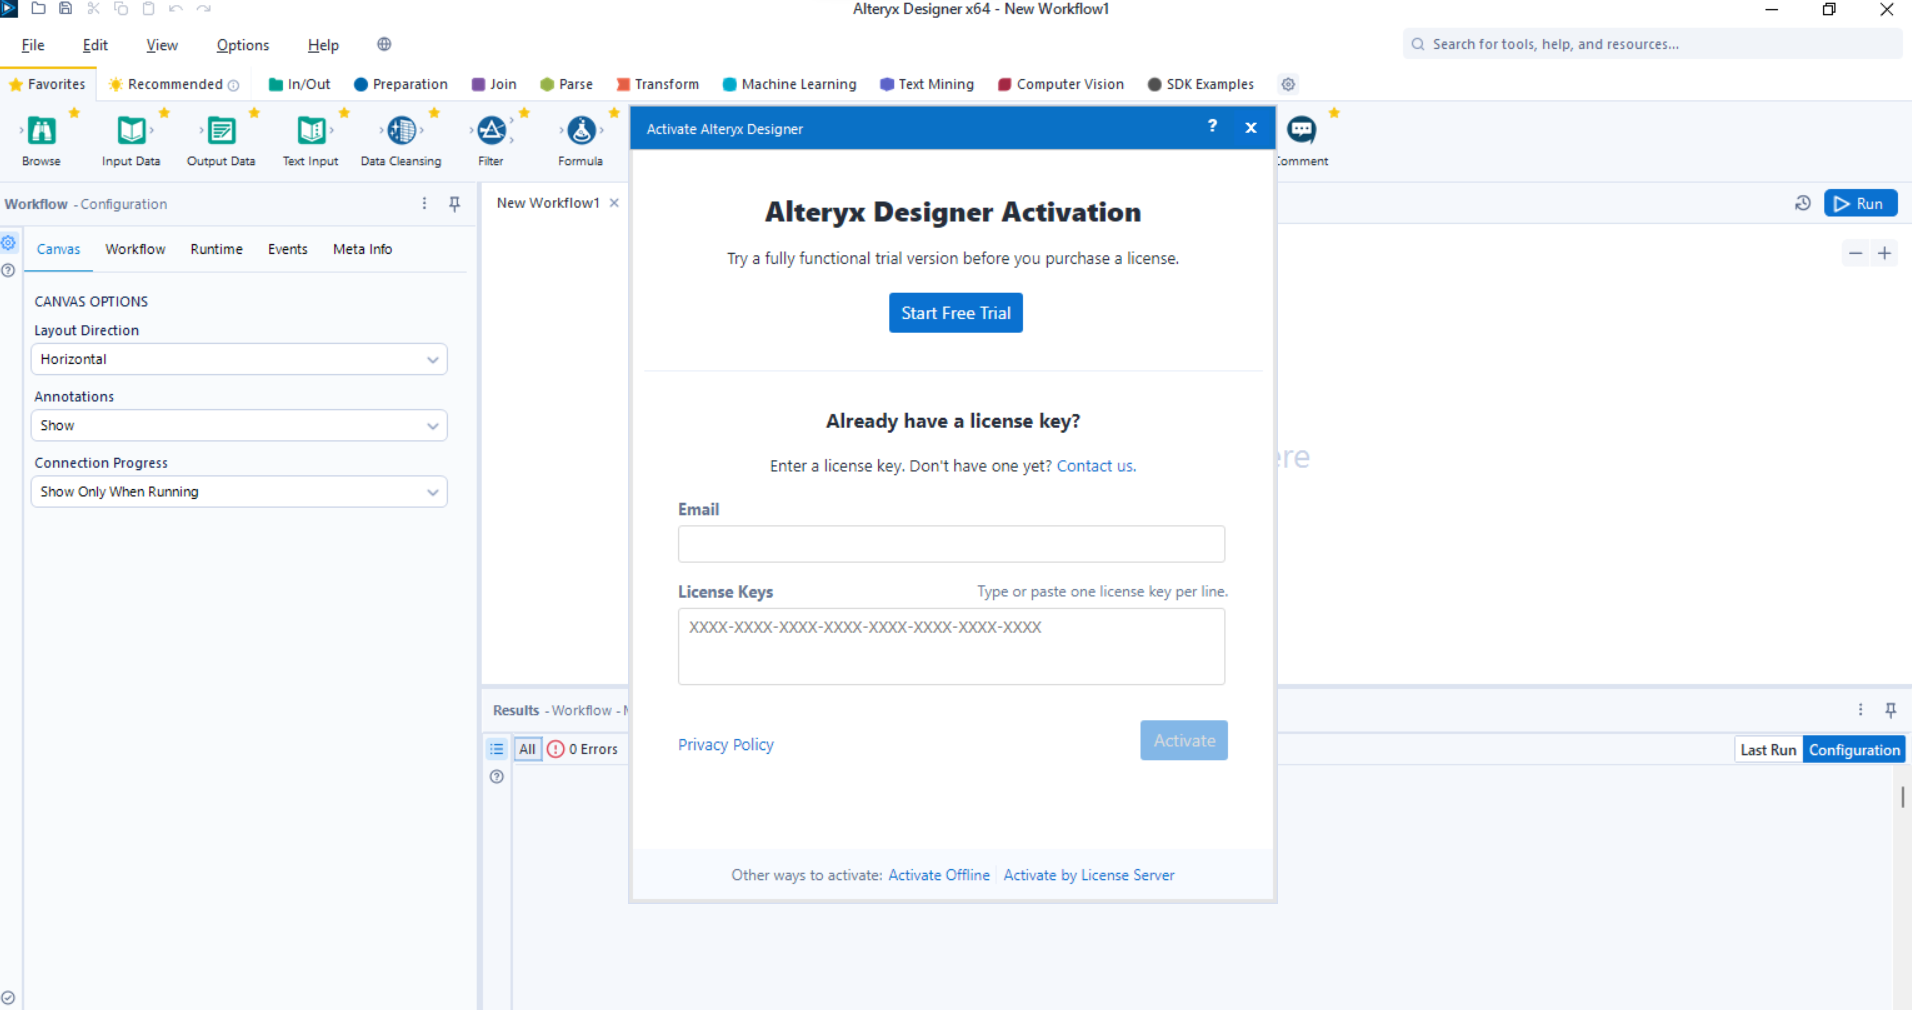 The AlteryX Designer platform and activation pop-up.